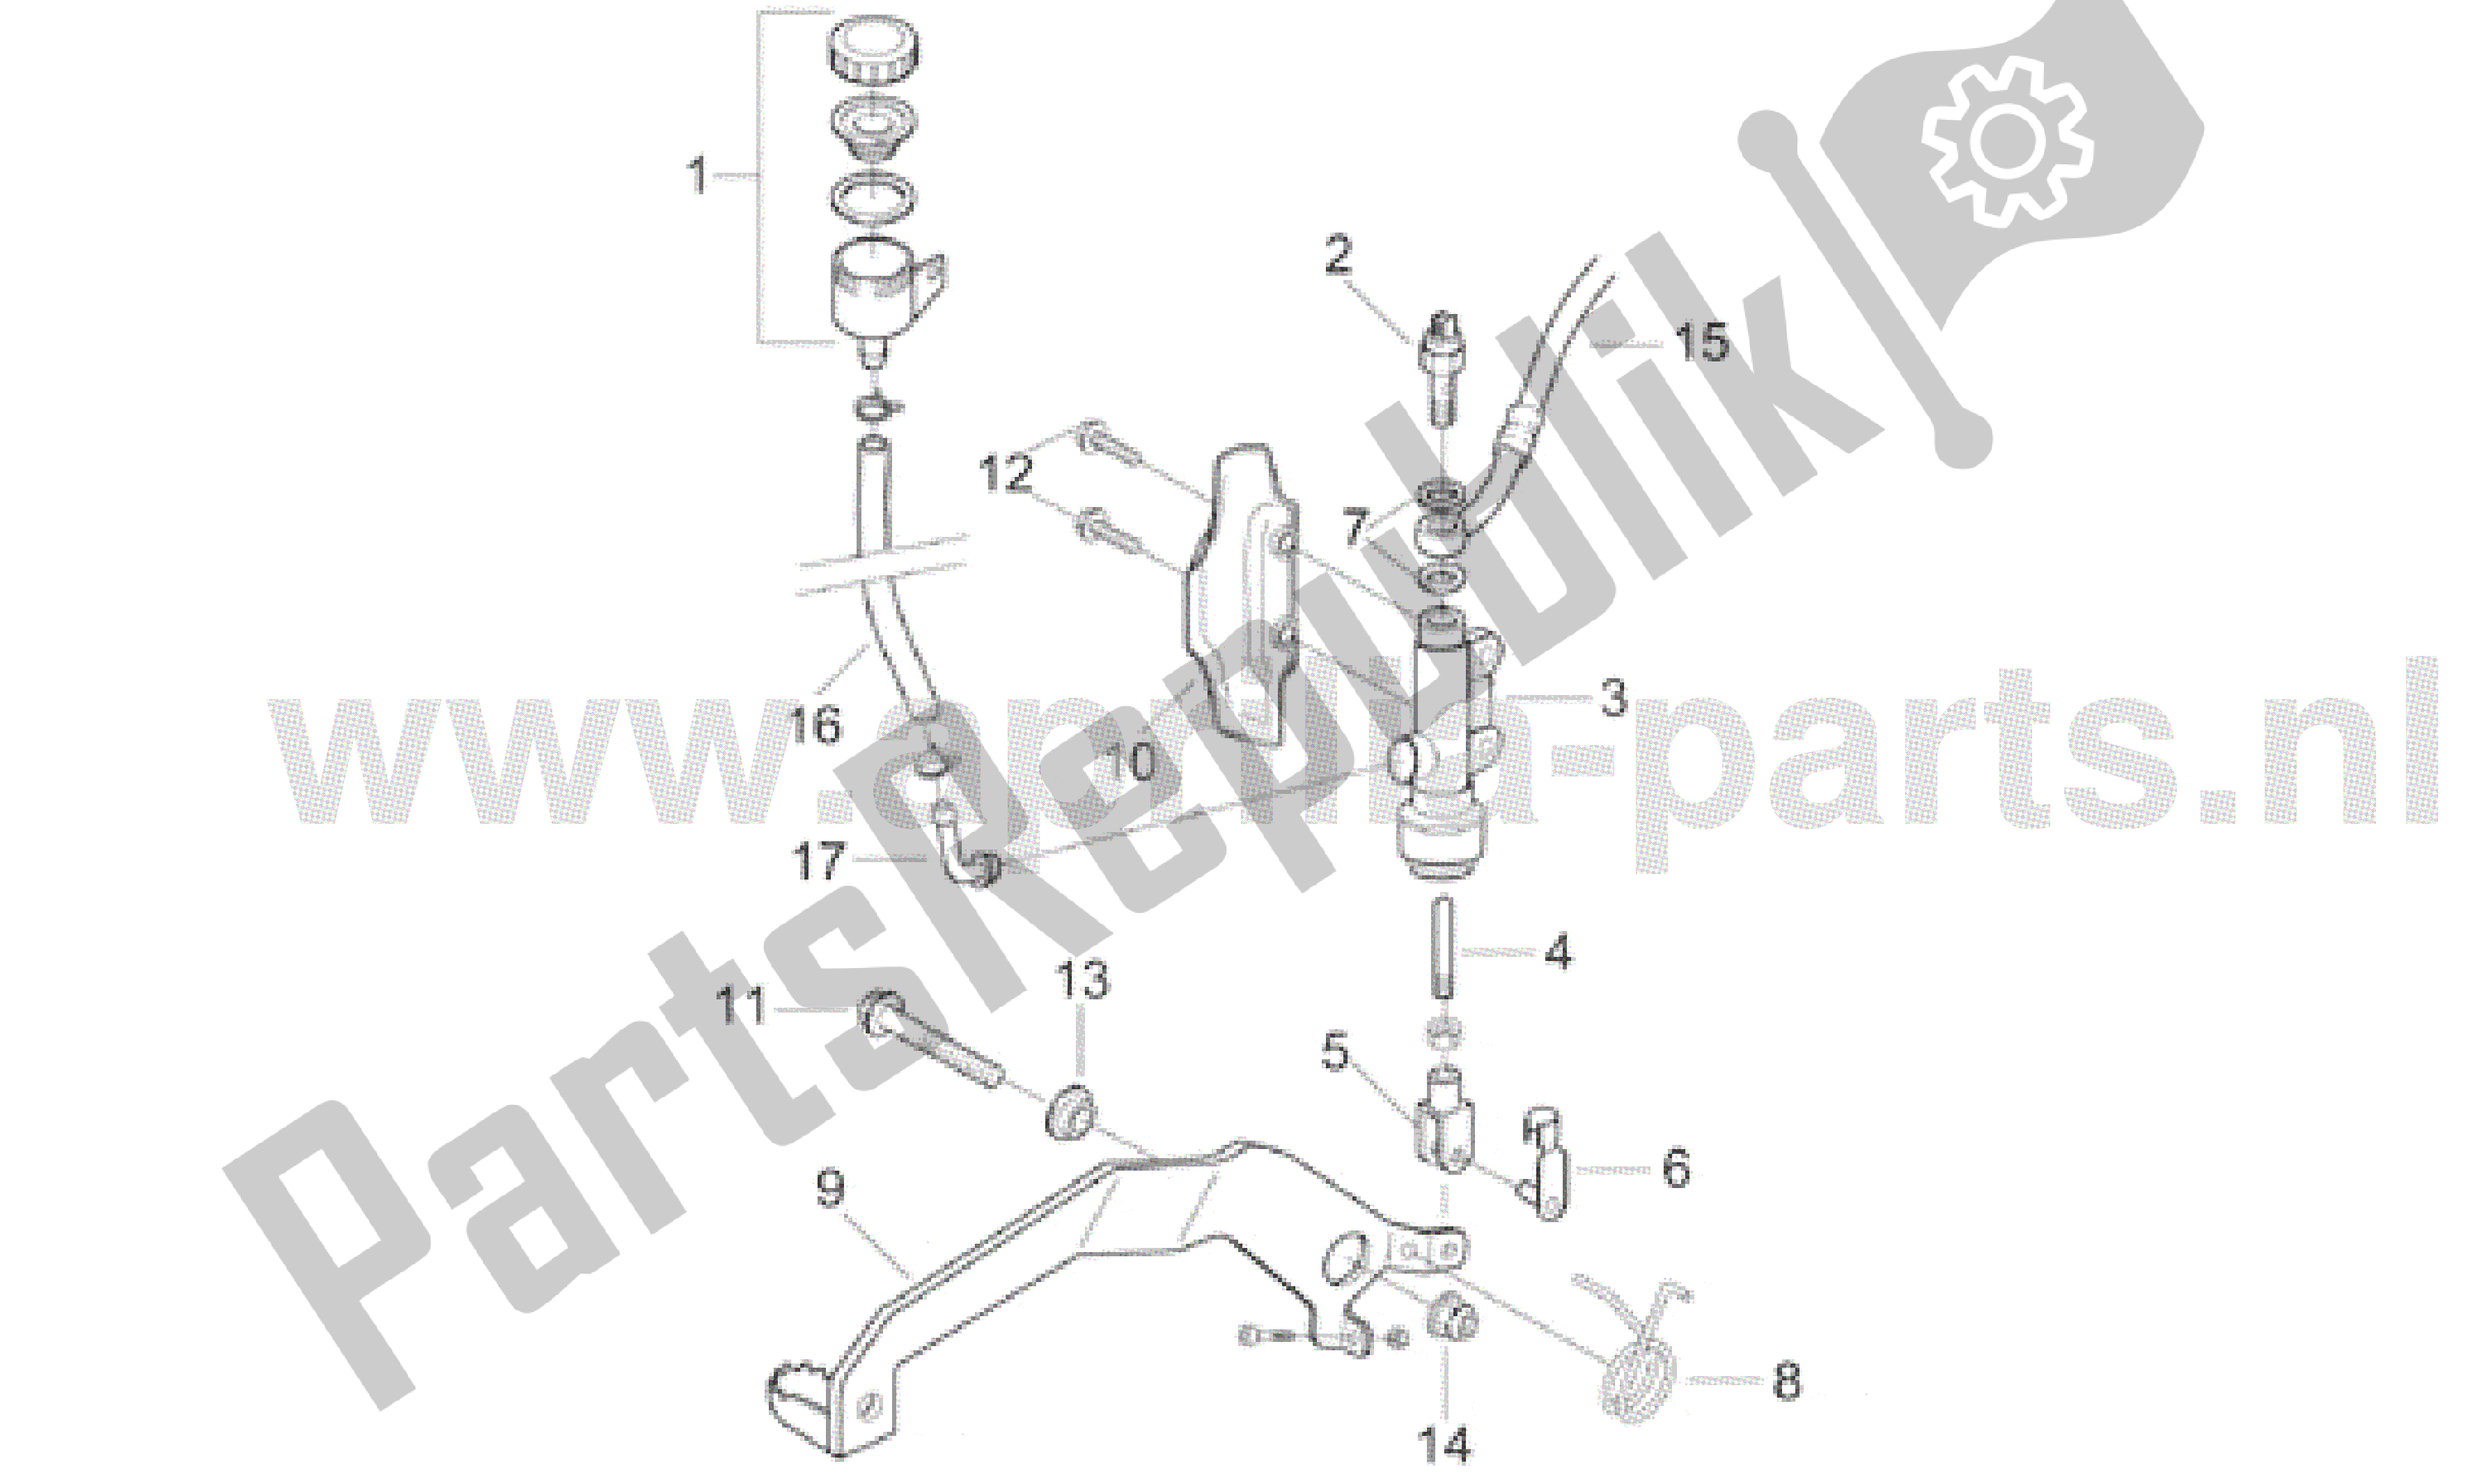 All parts for the Rear Brake Pump of the Aprilia RX 50 1995 - 2000